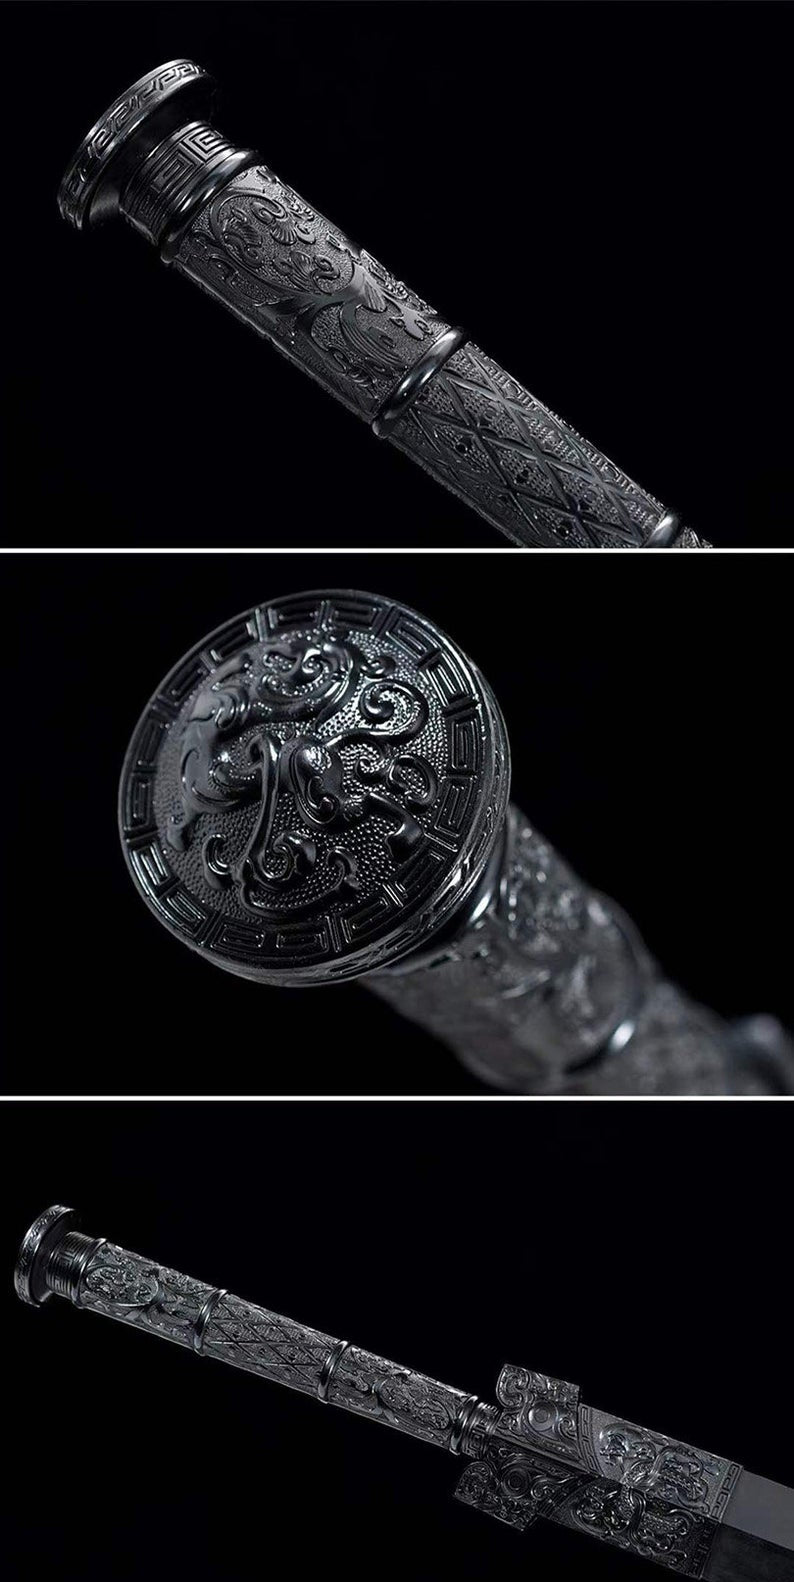 Handmade Chinese Swords Han Dynasty Swords High Quality Real Sword Damascus Steel Full Tang Sharpened Ebony Scabbard